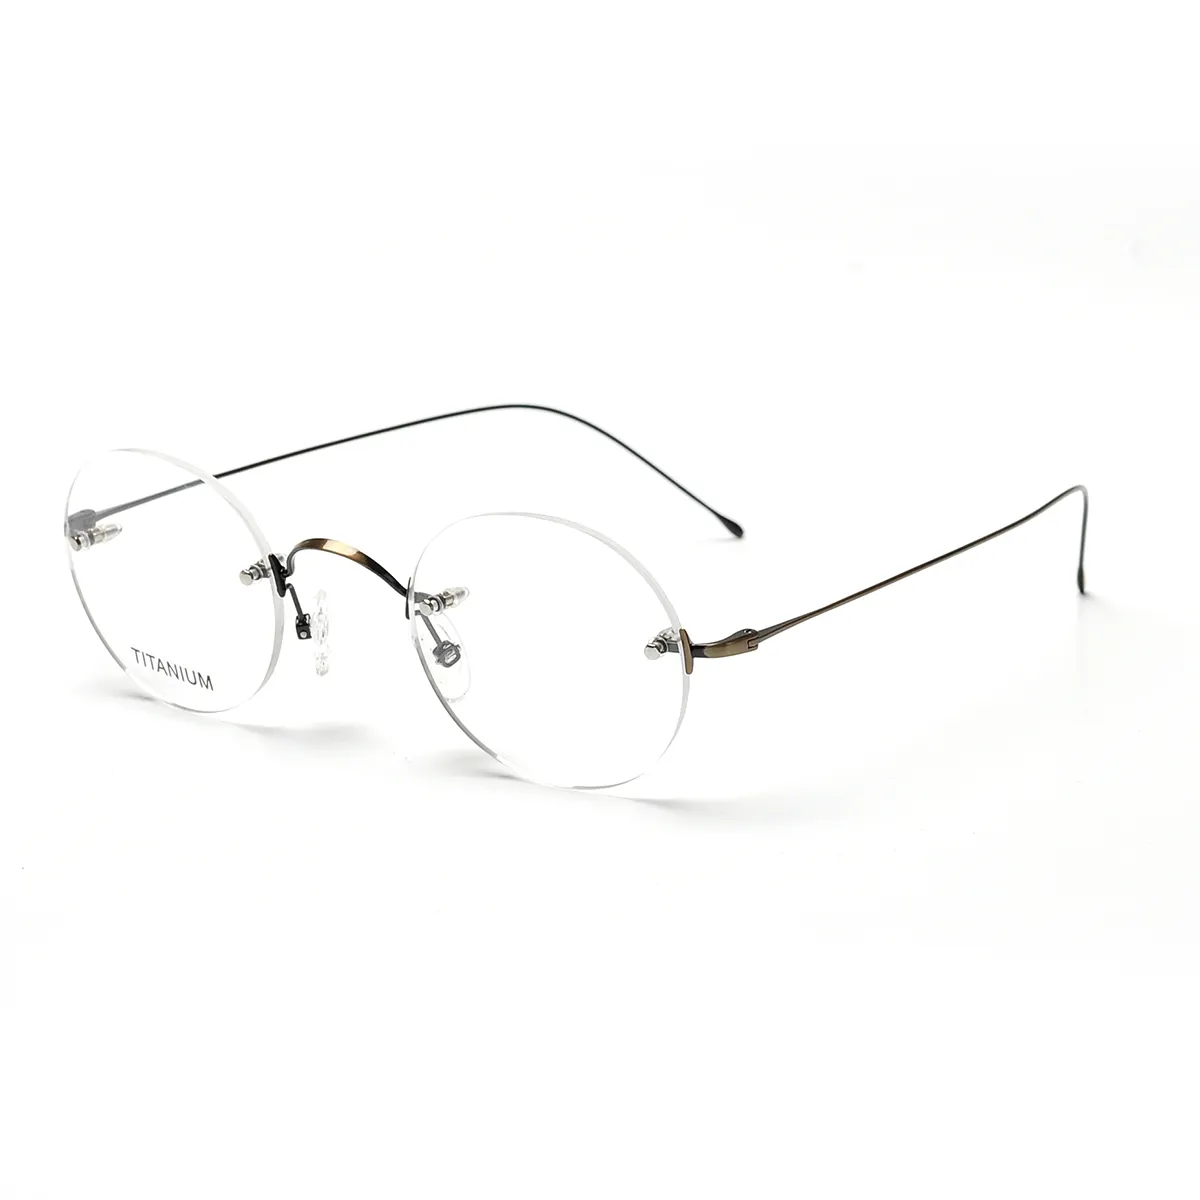 2019 fashion titanium optical glasses frames vintage rimless women men round eyeglasses spectacle myopia frames optical